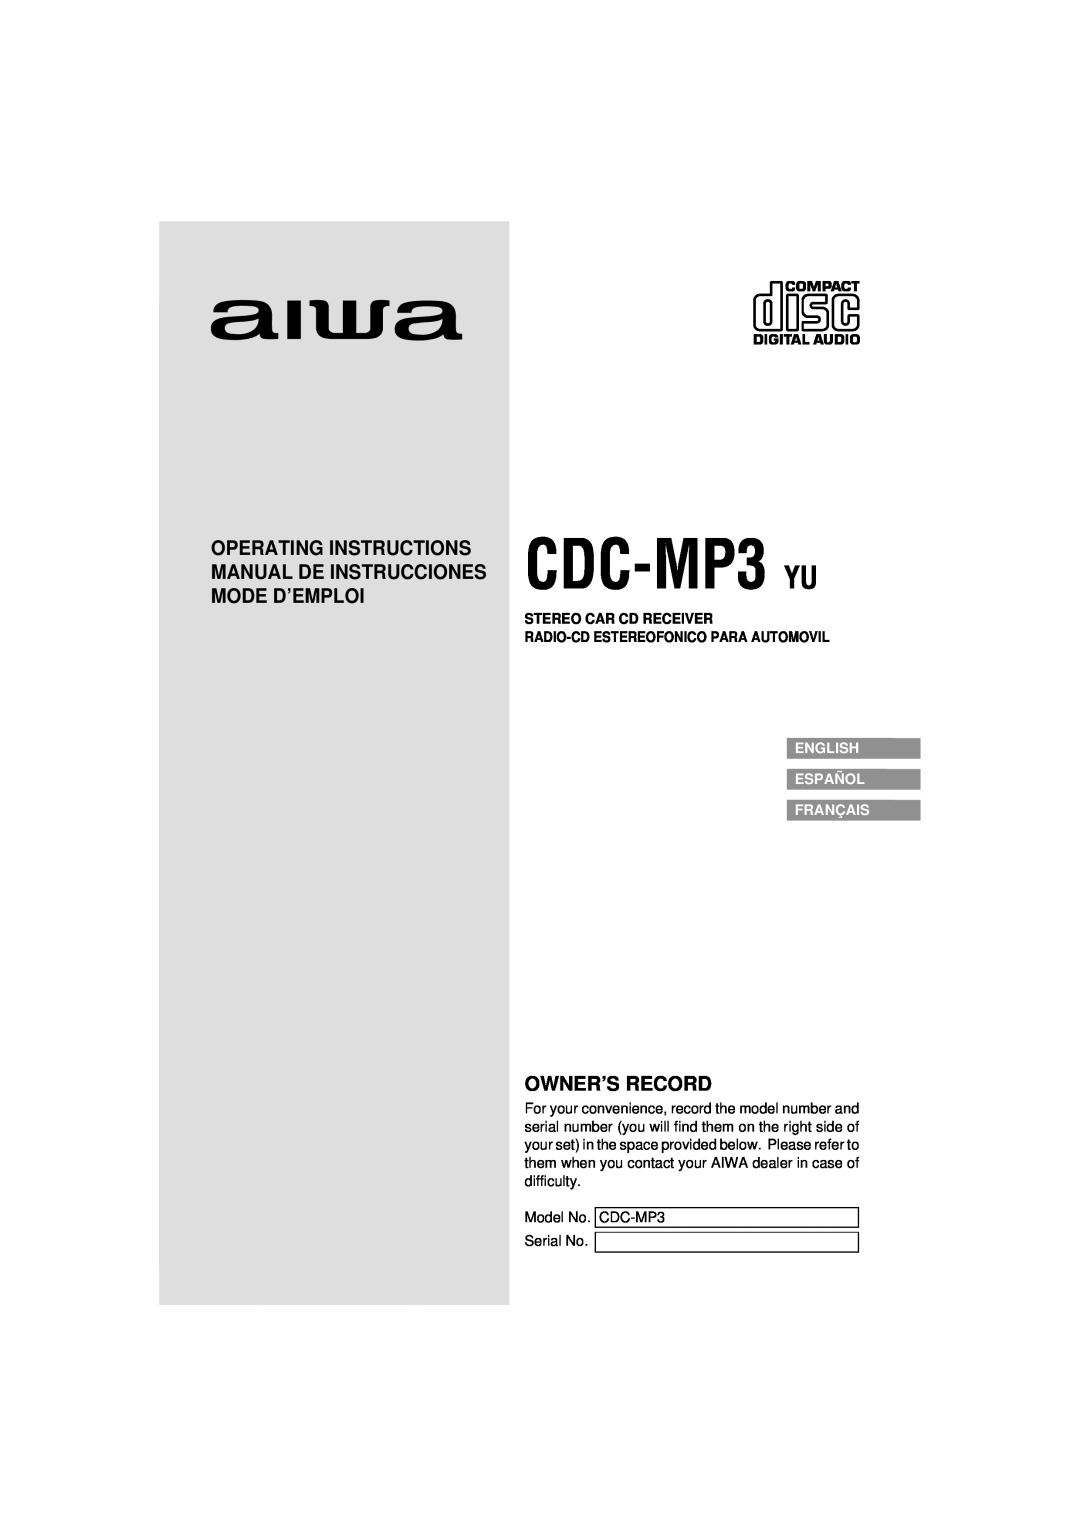 Aiwa manual Owner’S Record, English Español Français, CDC-MP3 YU 